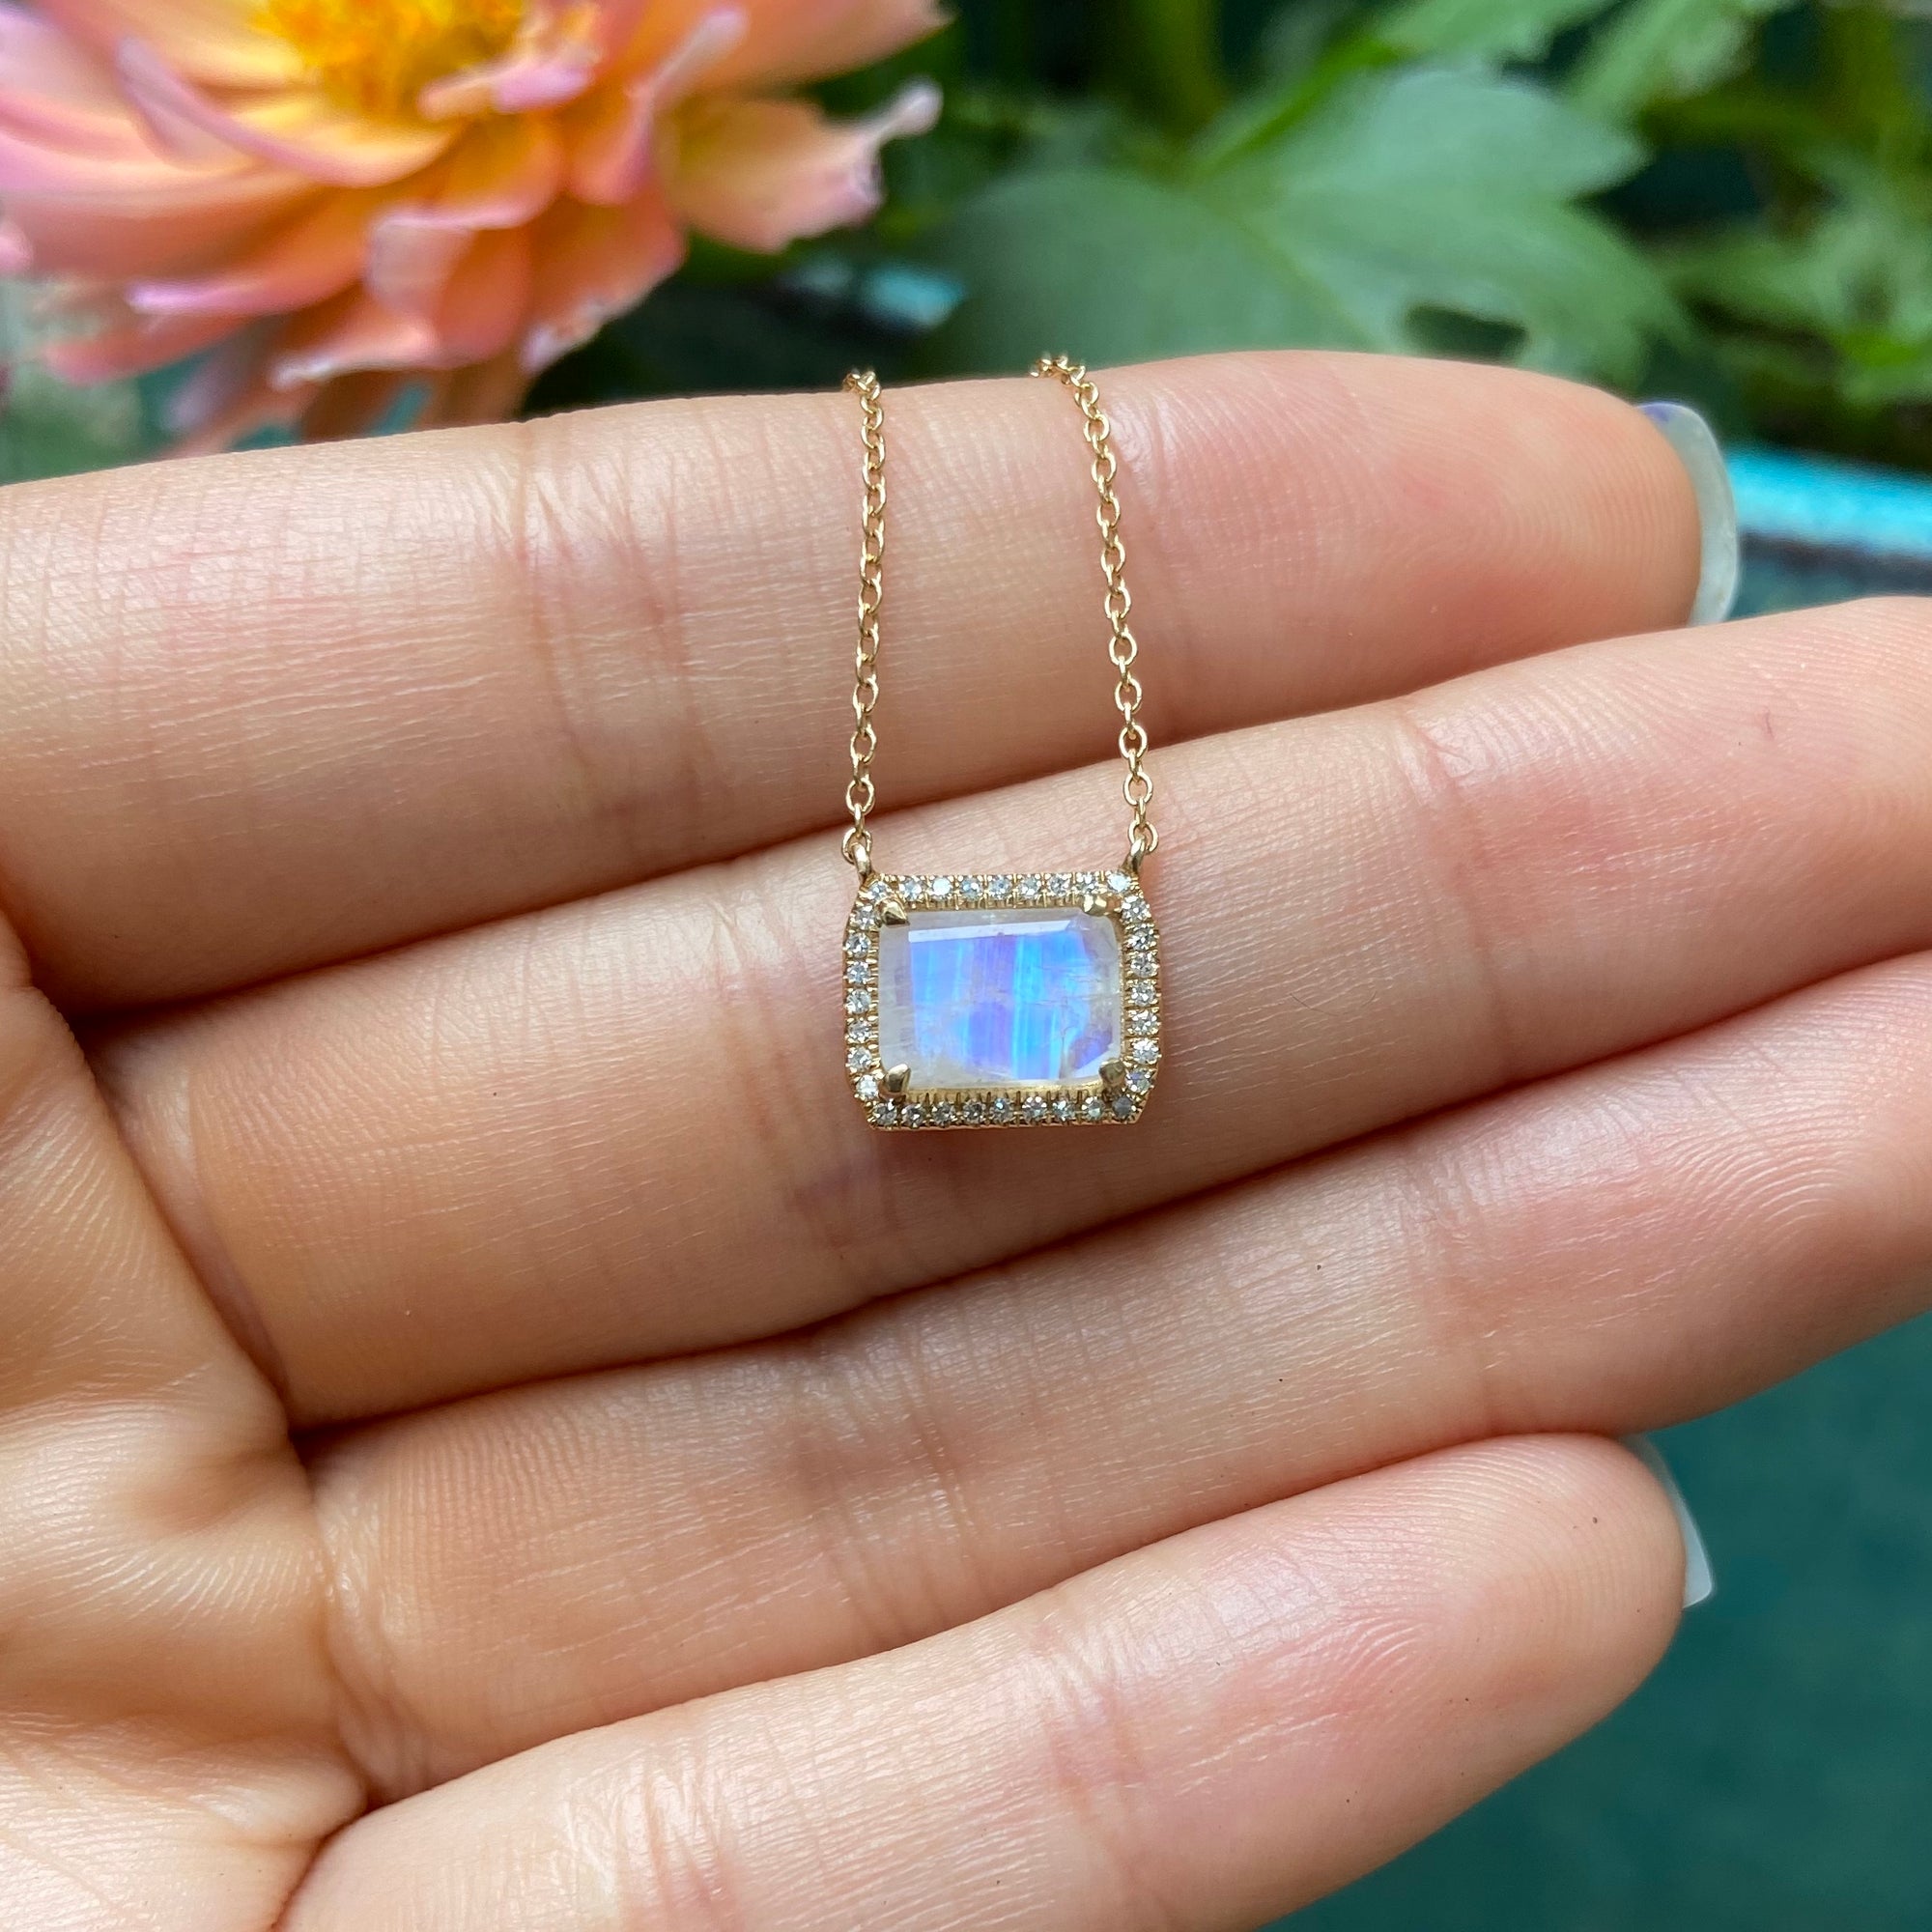 Atiena Rainbow Moonstone Necklace With Diamonds in 14K Gold